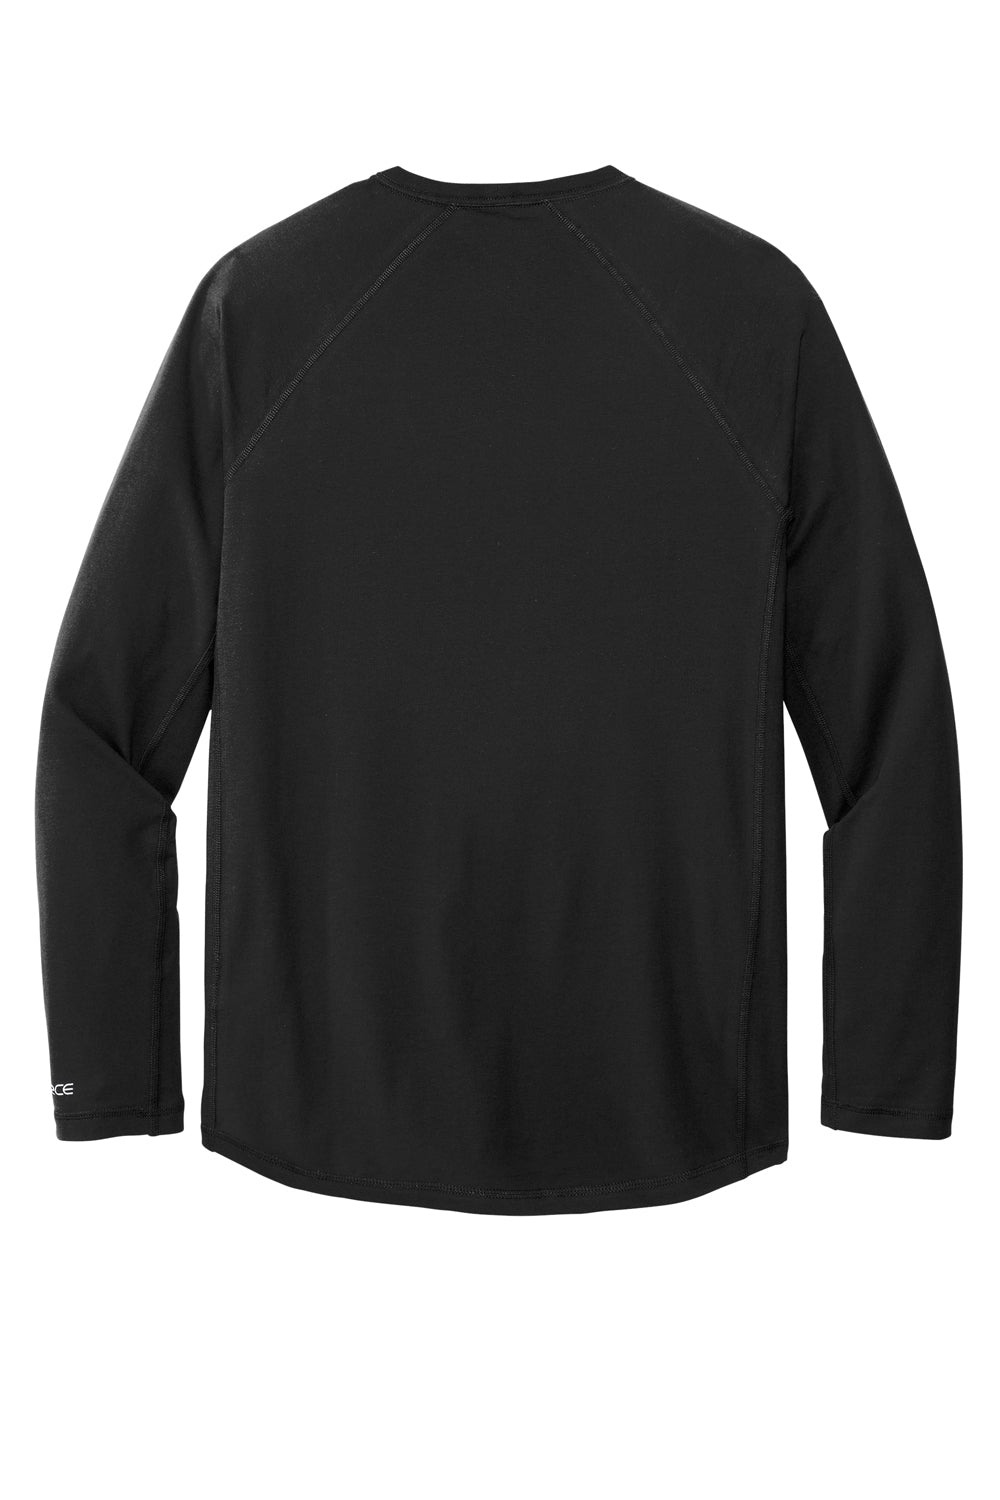 Carhartt CT104617 Mens Force Moisture Wicking Long Sleeve Crewneck T-Shirt w/ Pocket Black Flat Back